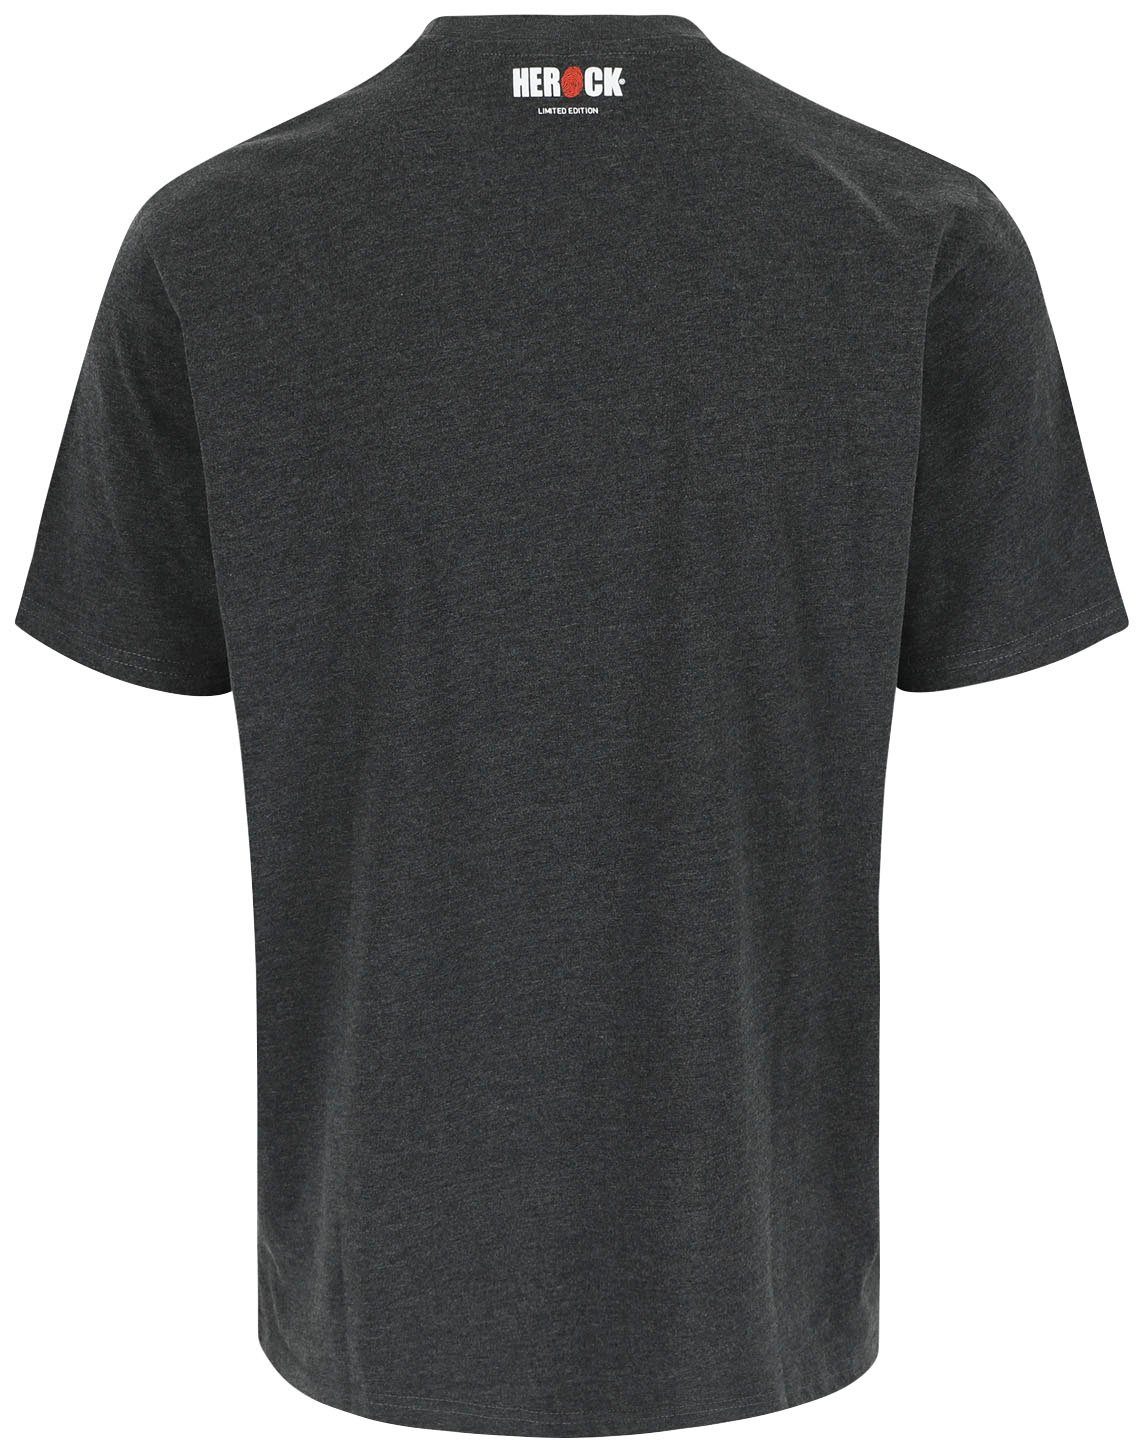 Herock T-Shirt Maximus Edition Limited